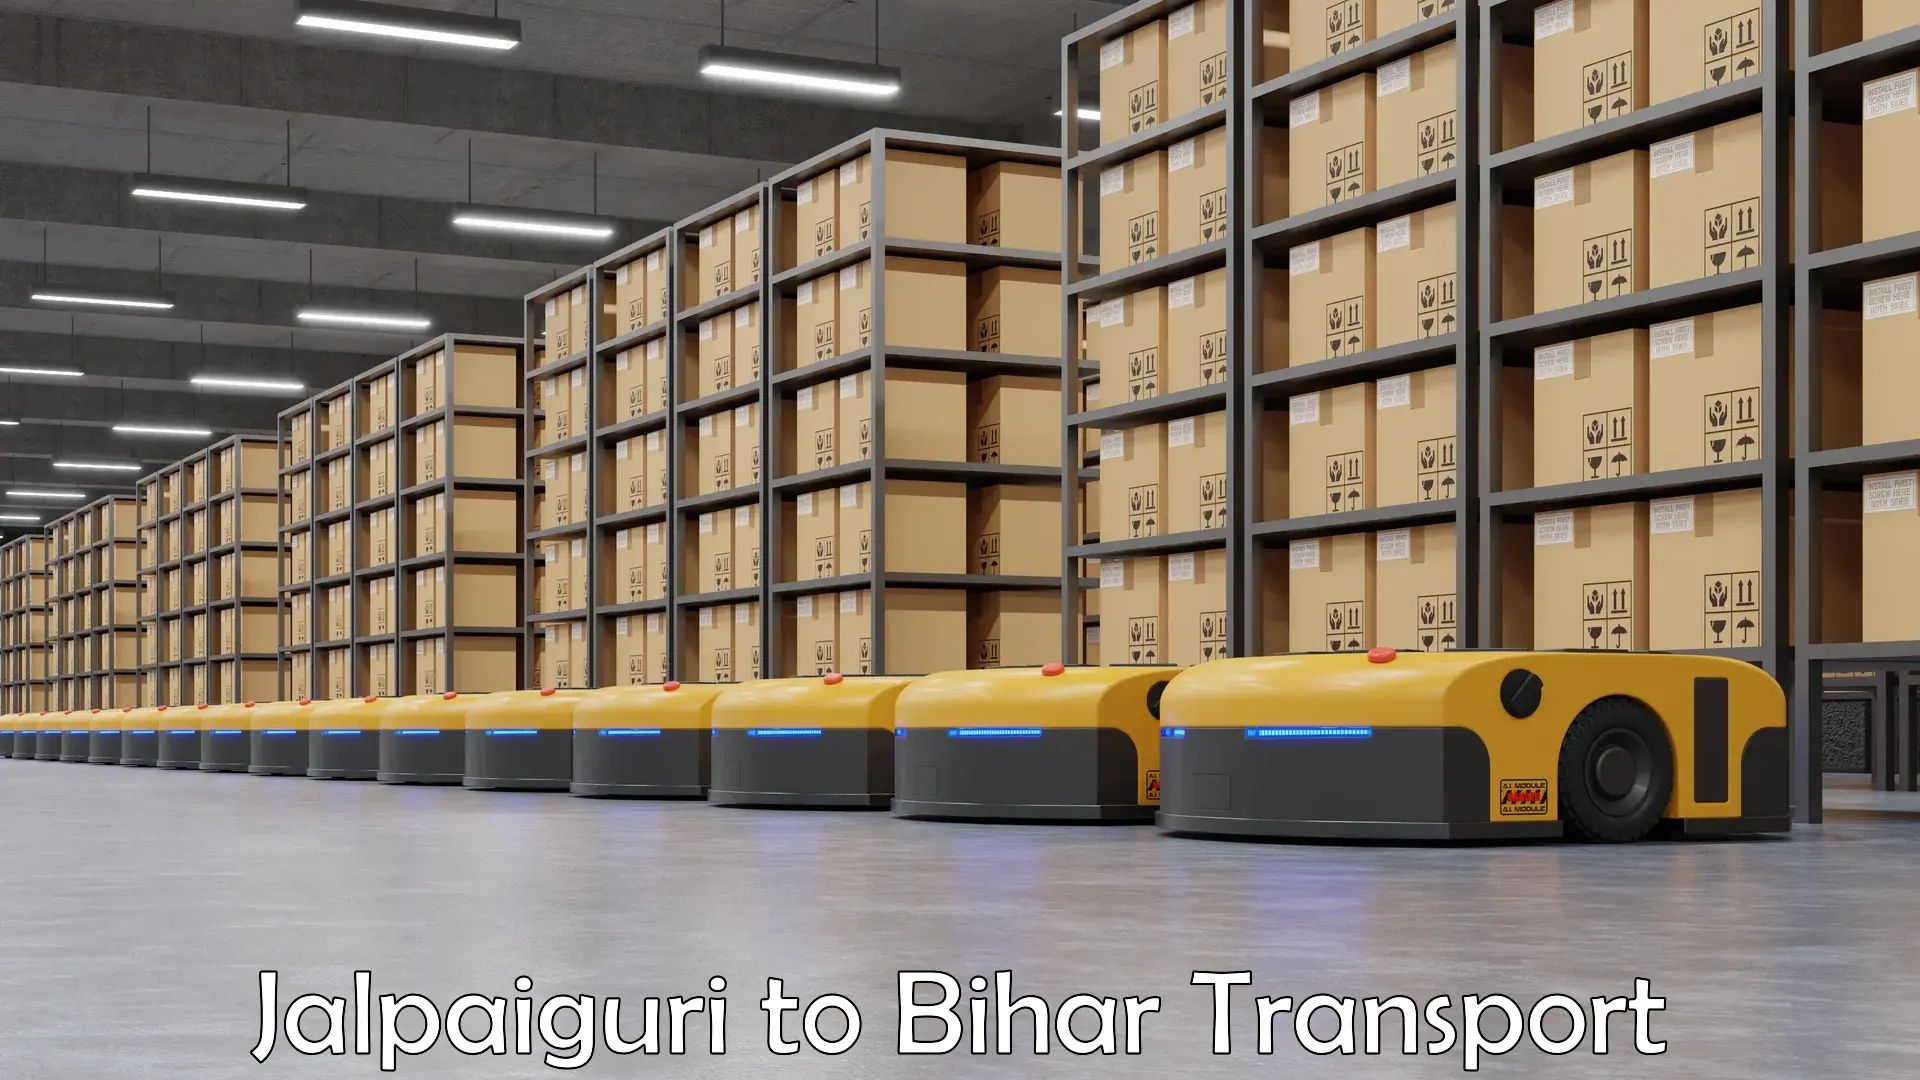 Truck transport companies in India Jalpaiguri to Biraul